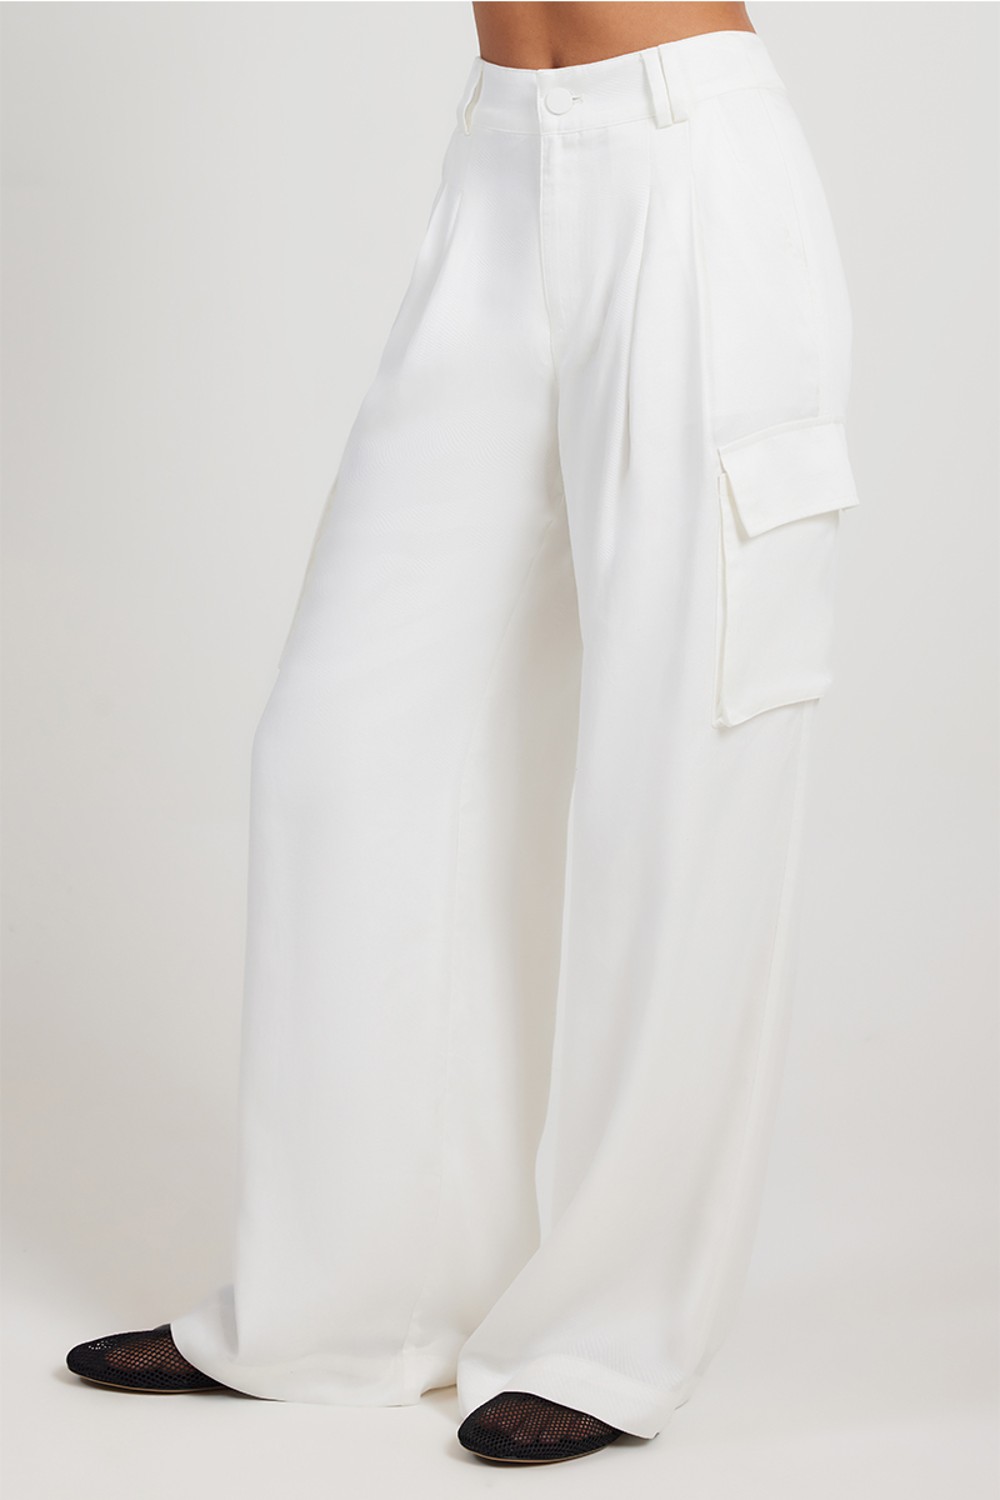 Ena Pelly Hayley Cargo Pant Vintage White | Stylerunner